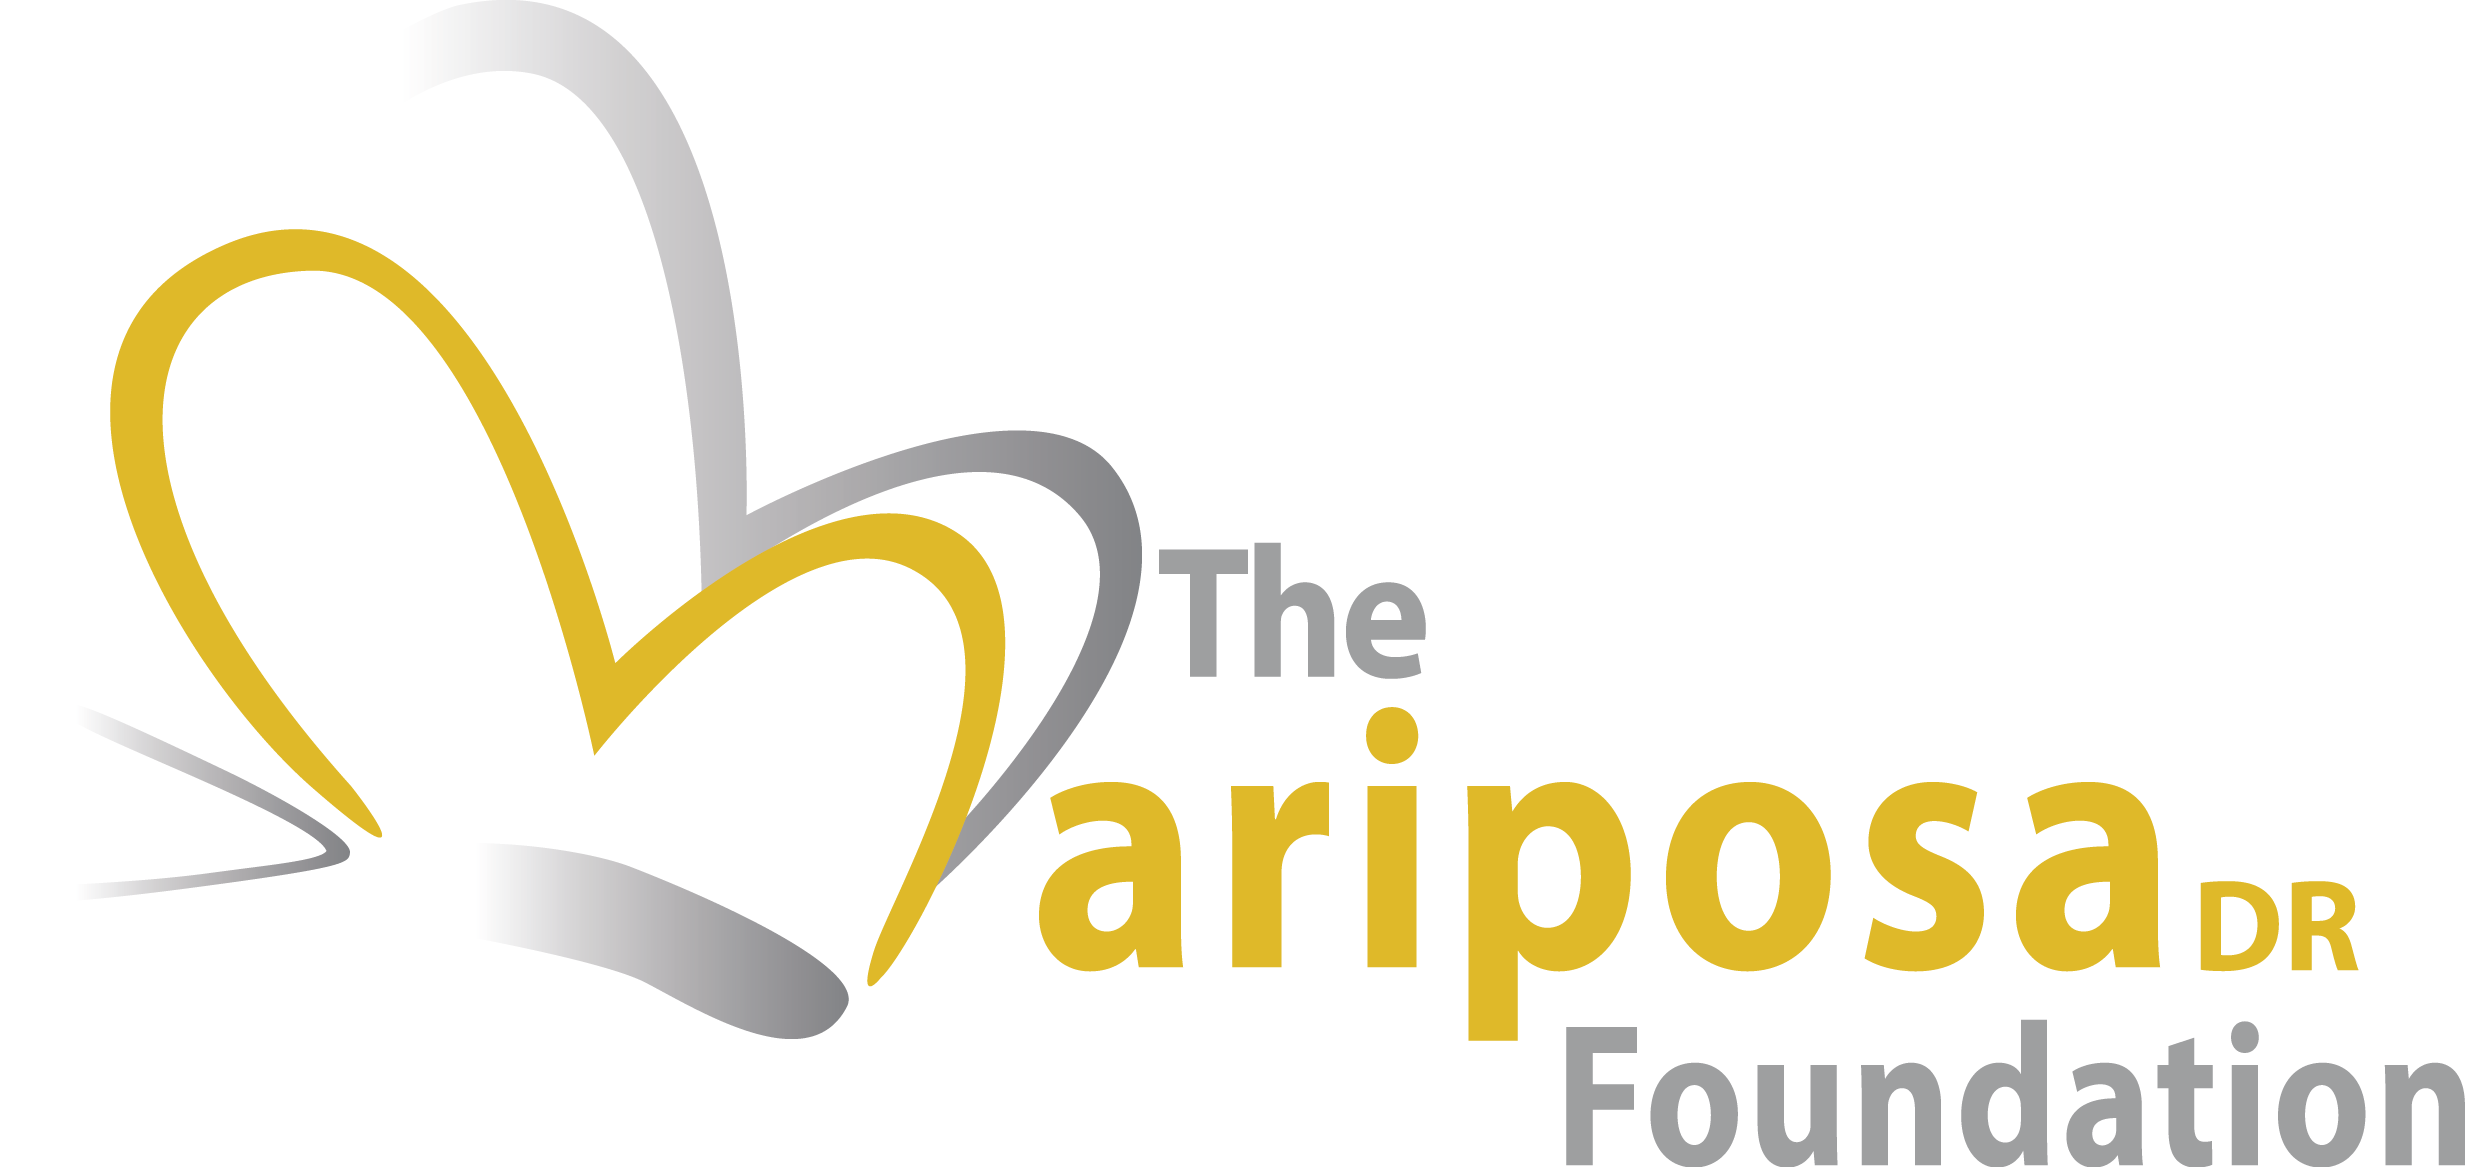 Mariposa DR Foundation